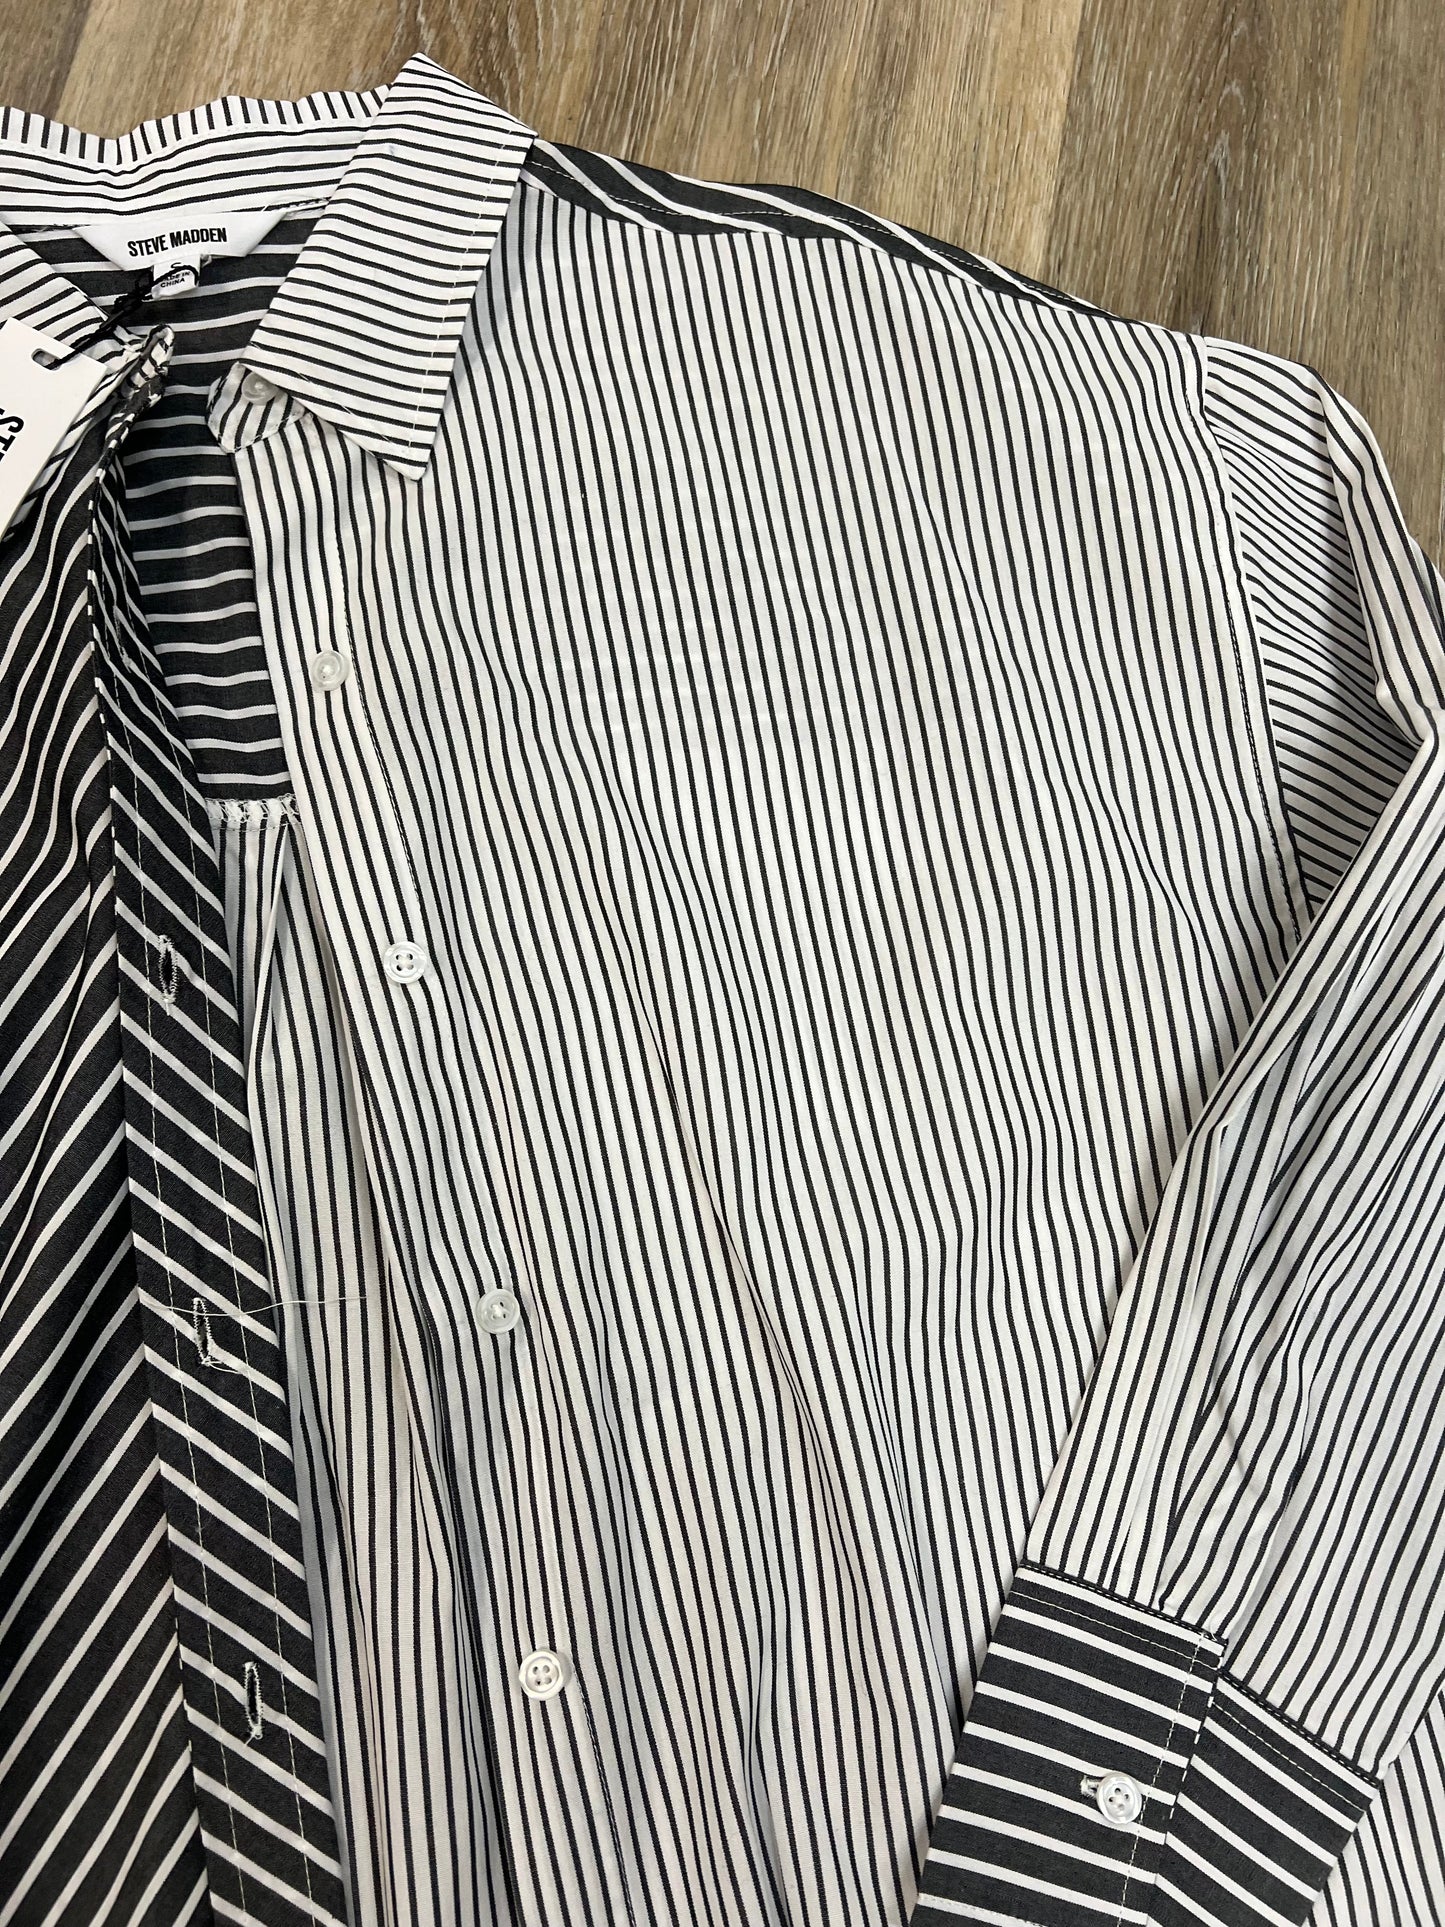 Striped Pattern Blouse Long Sleeve Steve Madden, Size S